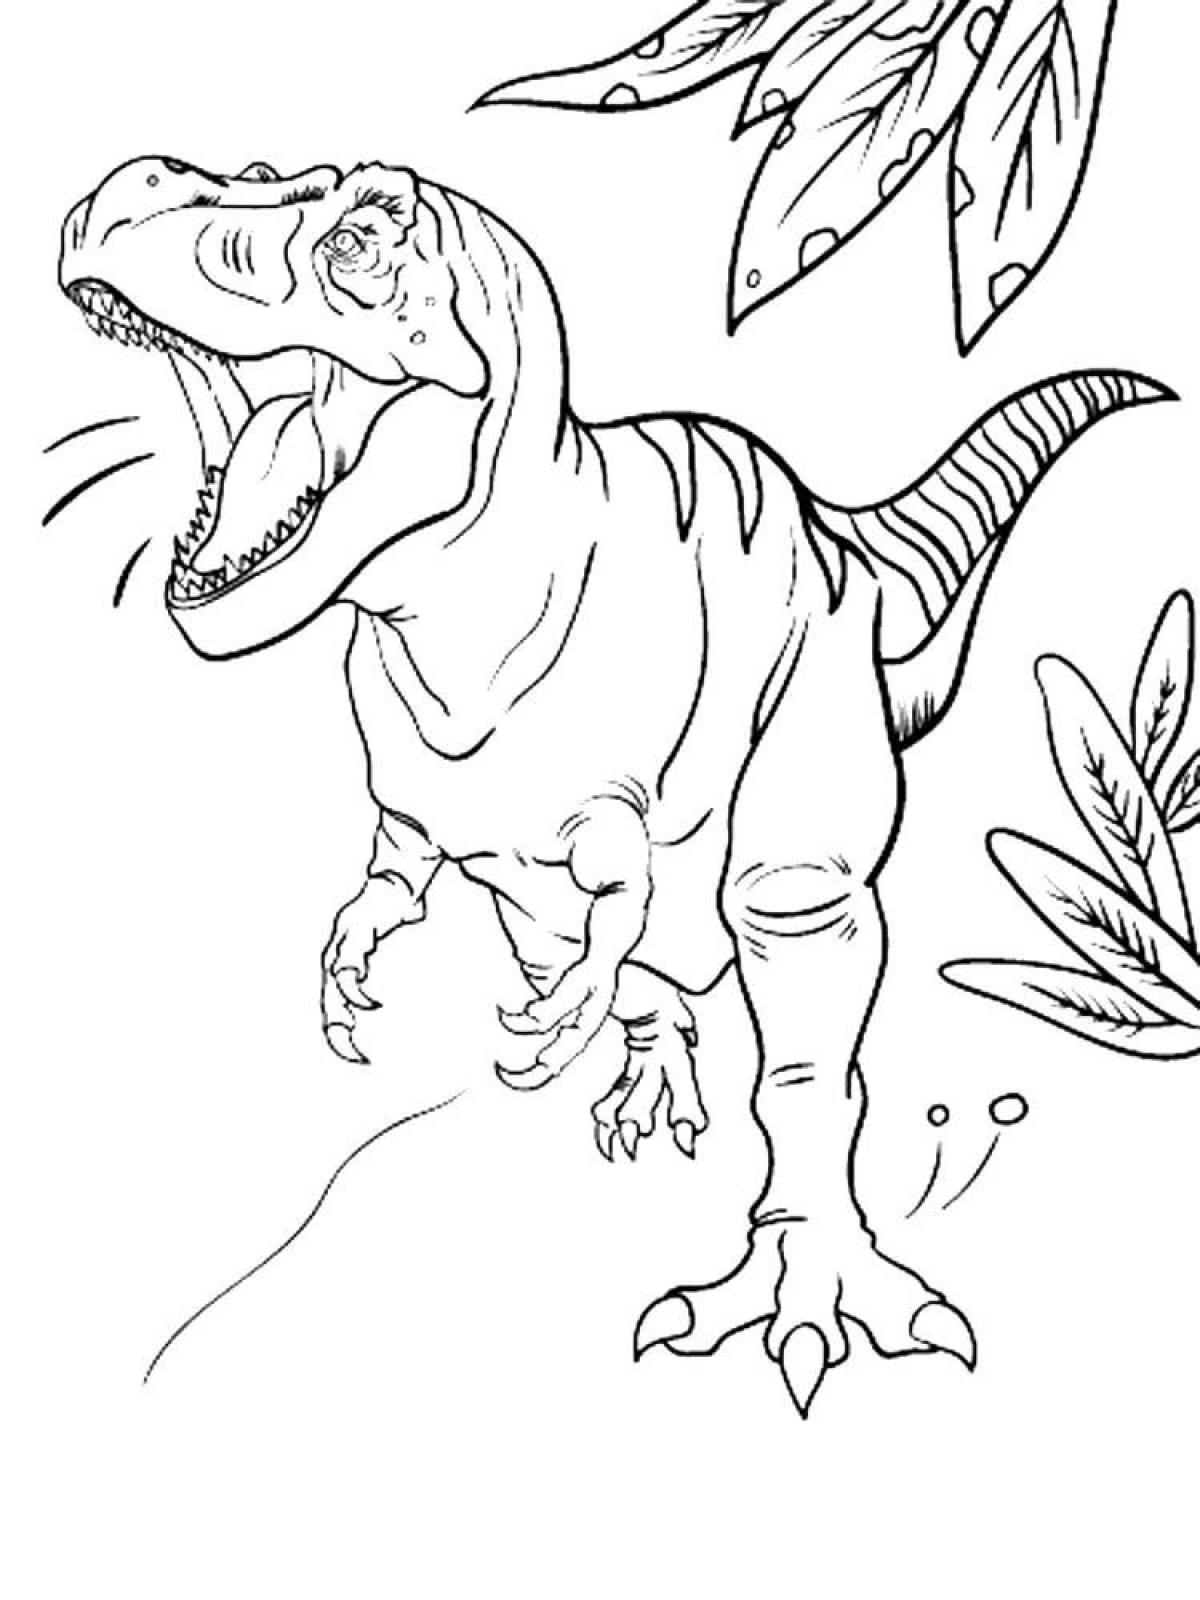 Dinosaur rex #3